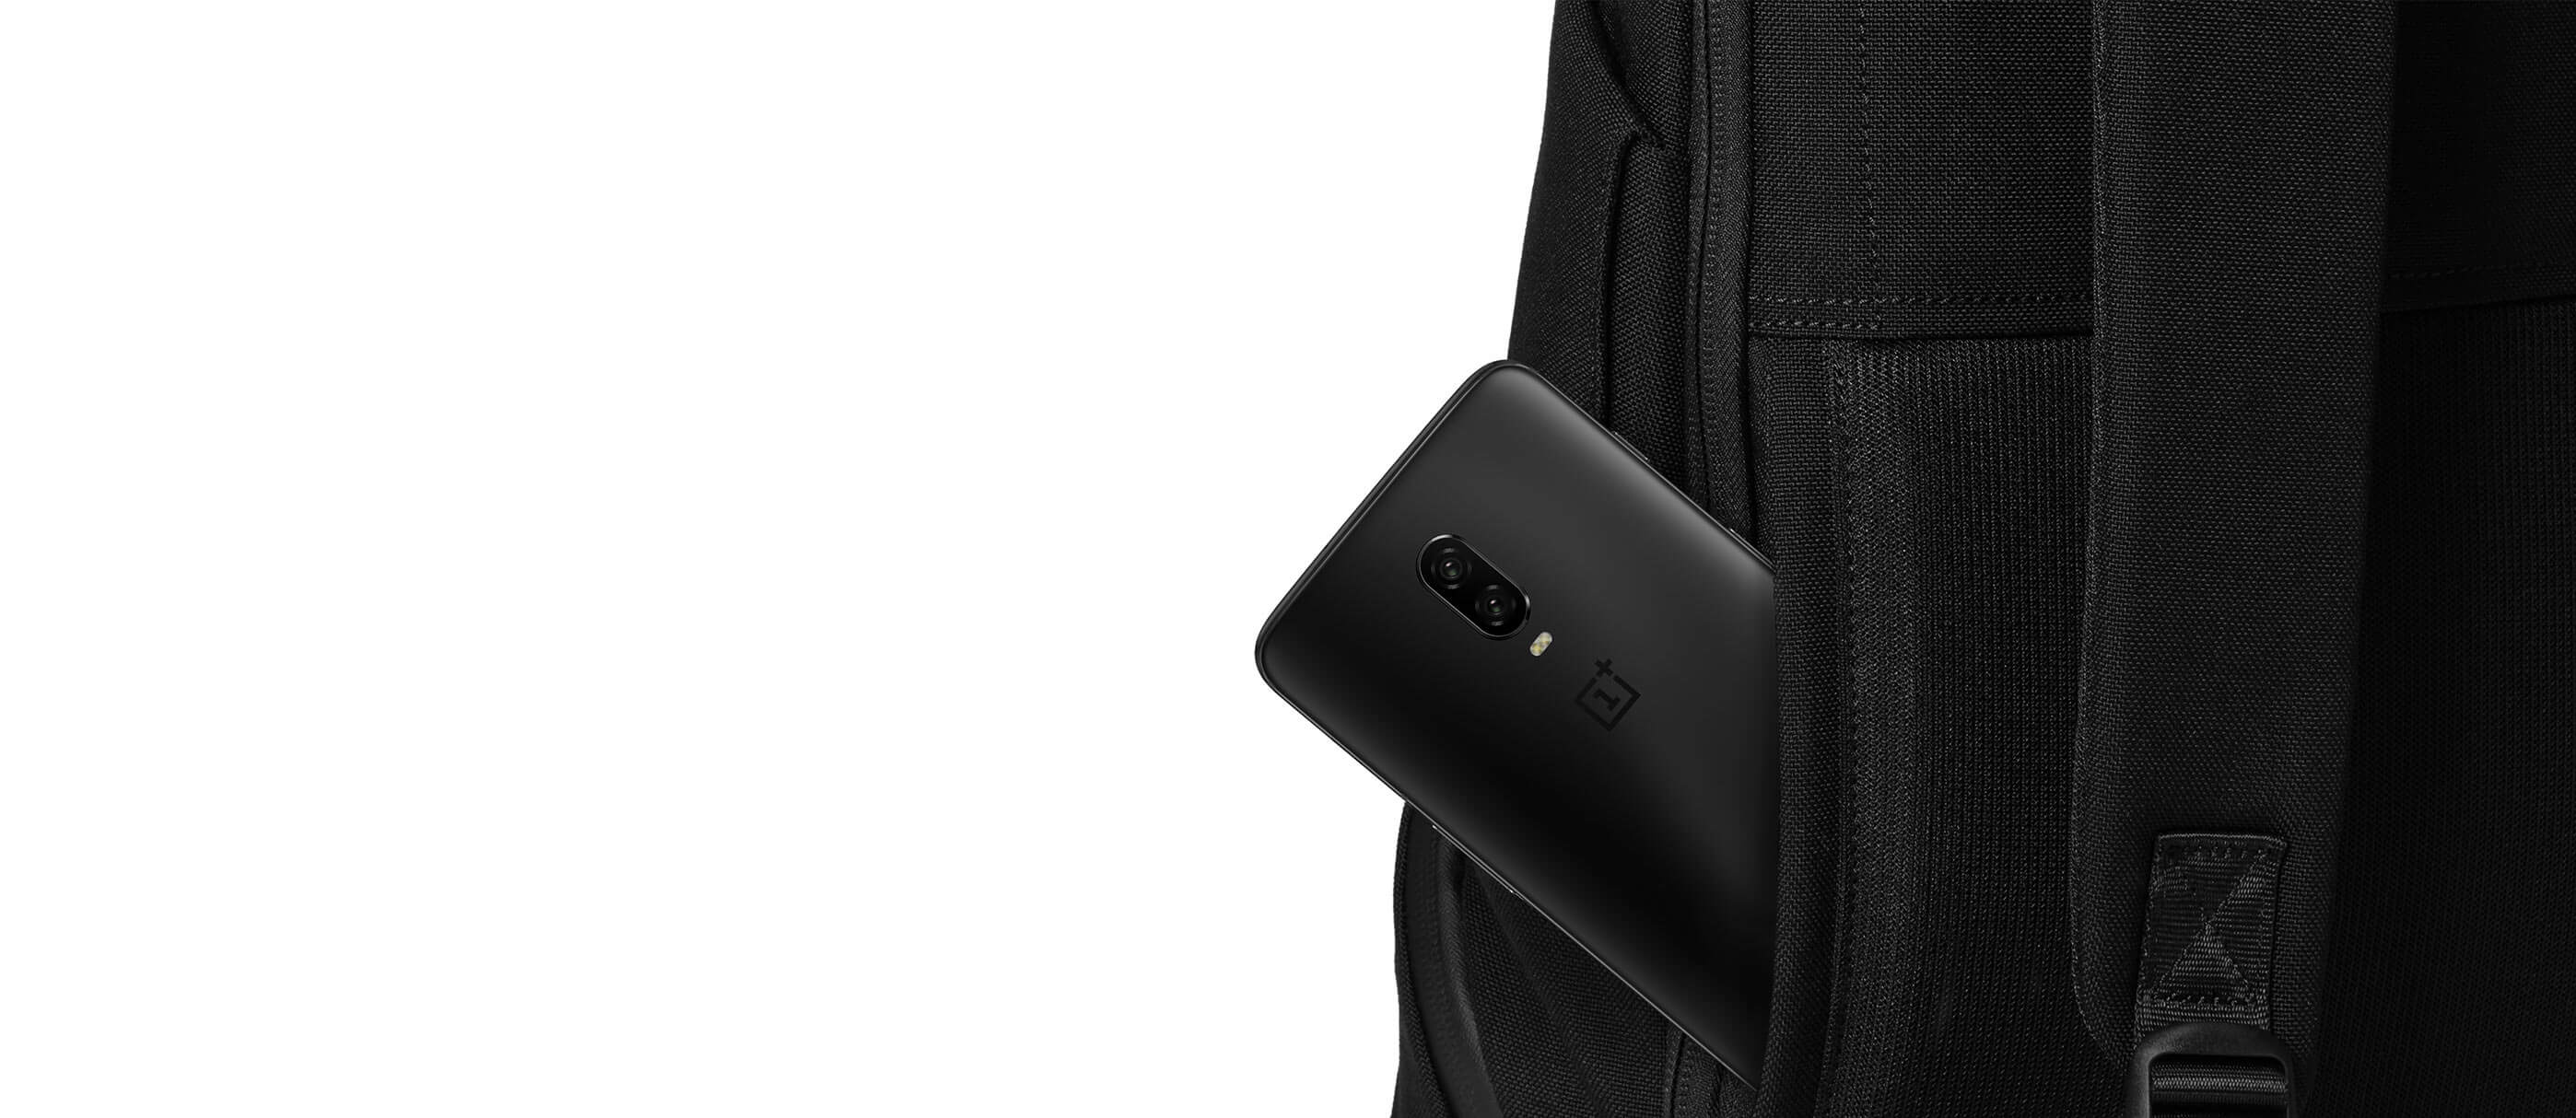 100% Original Official Oneplus Explorer backpack simple nylon wearable Laptop Ba